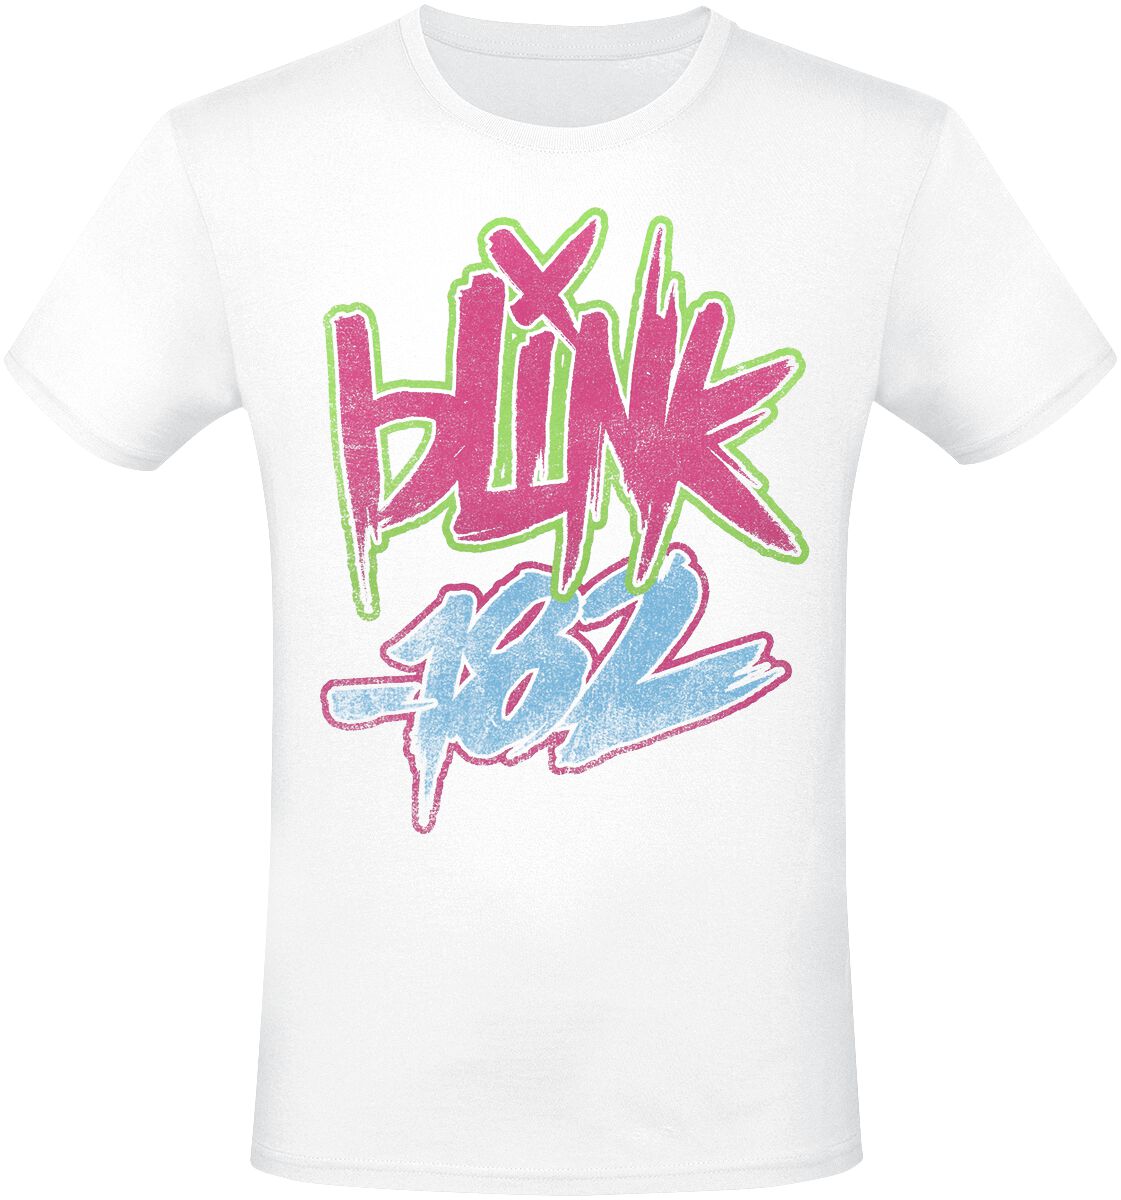 Blink-182 Text T-Shirt weiß in S